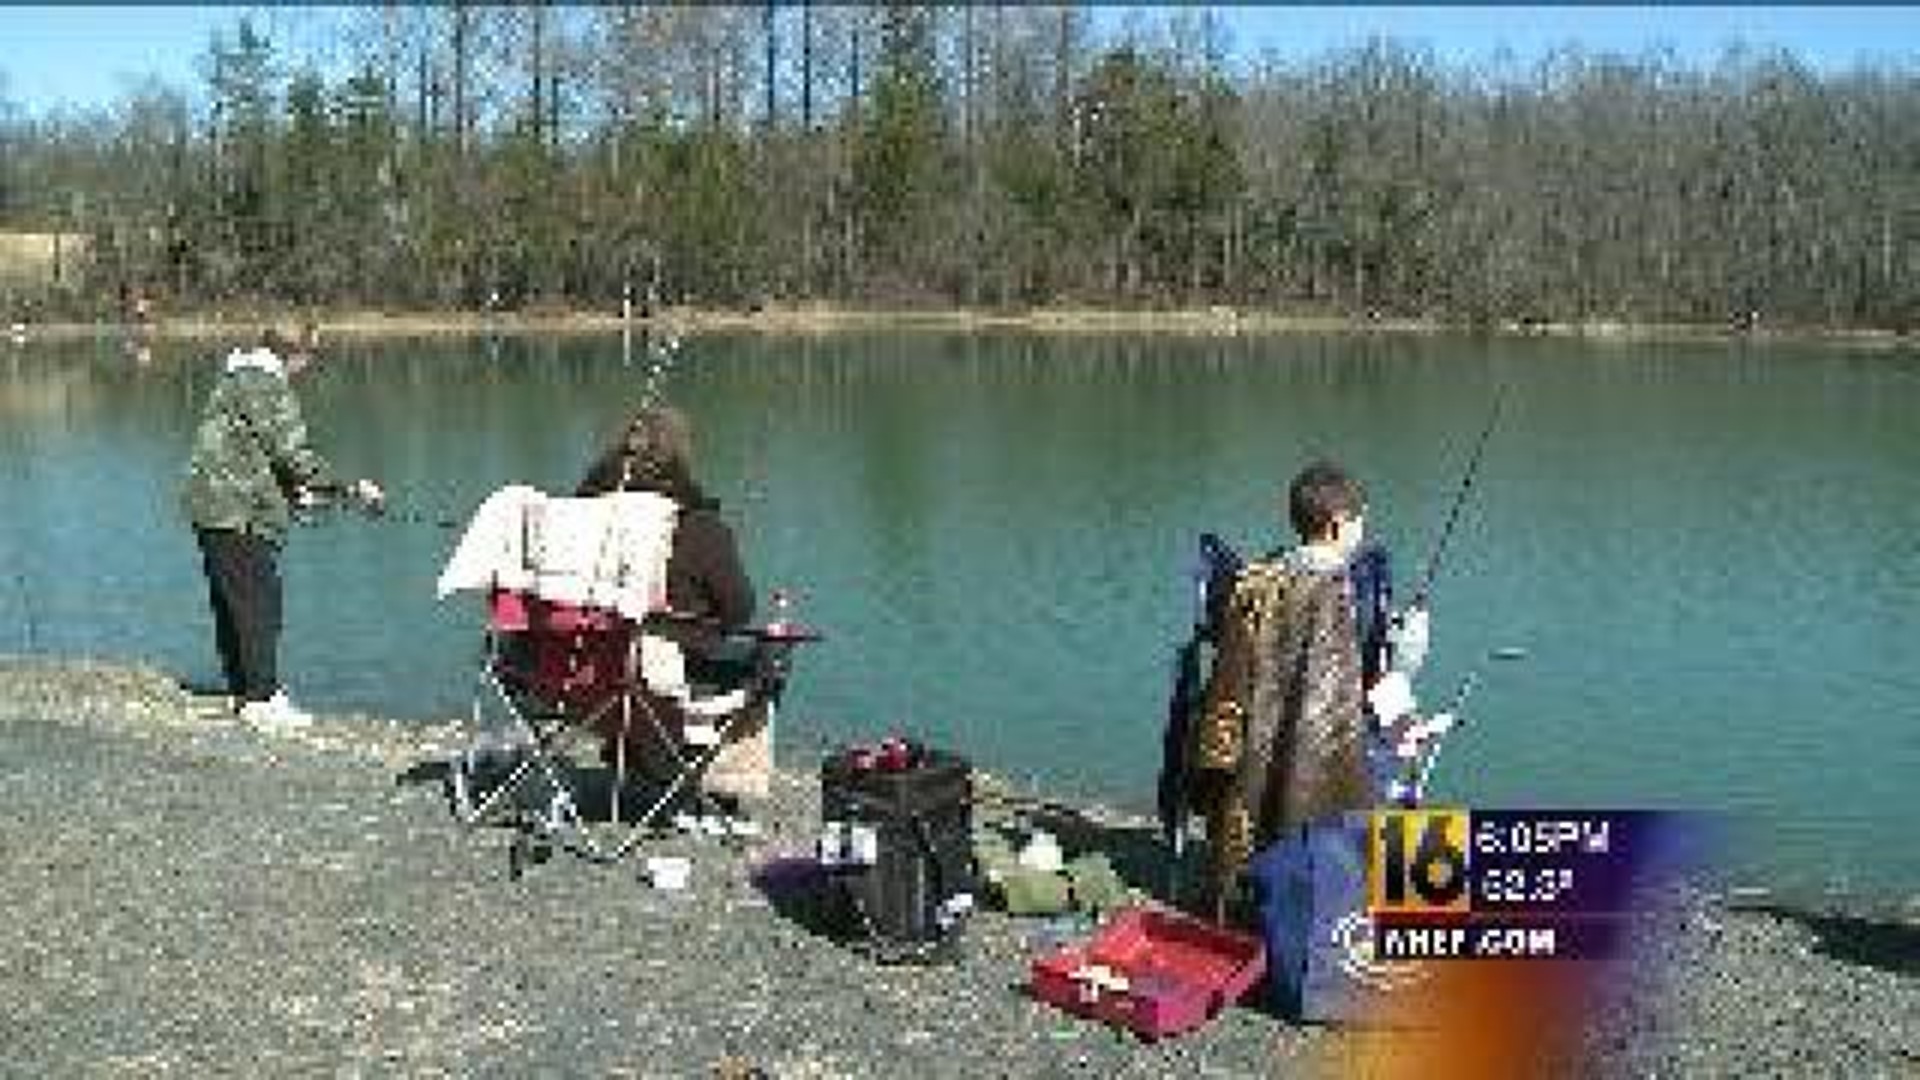 Foster Family Bonds at Fishing Opener